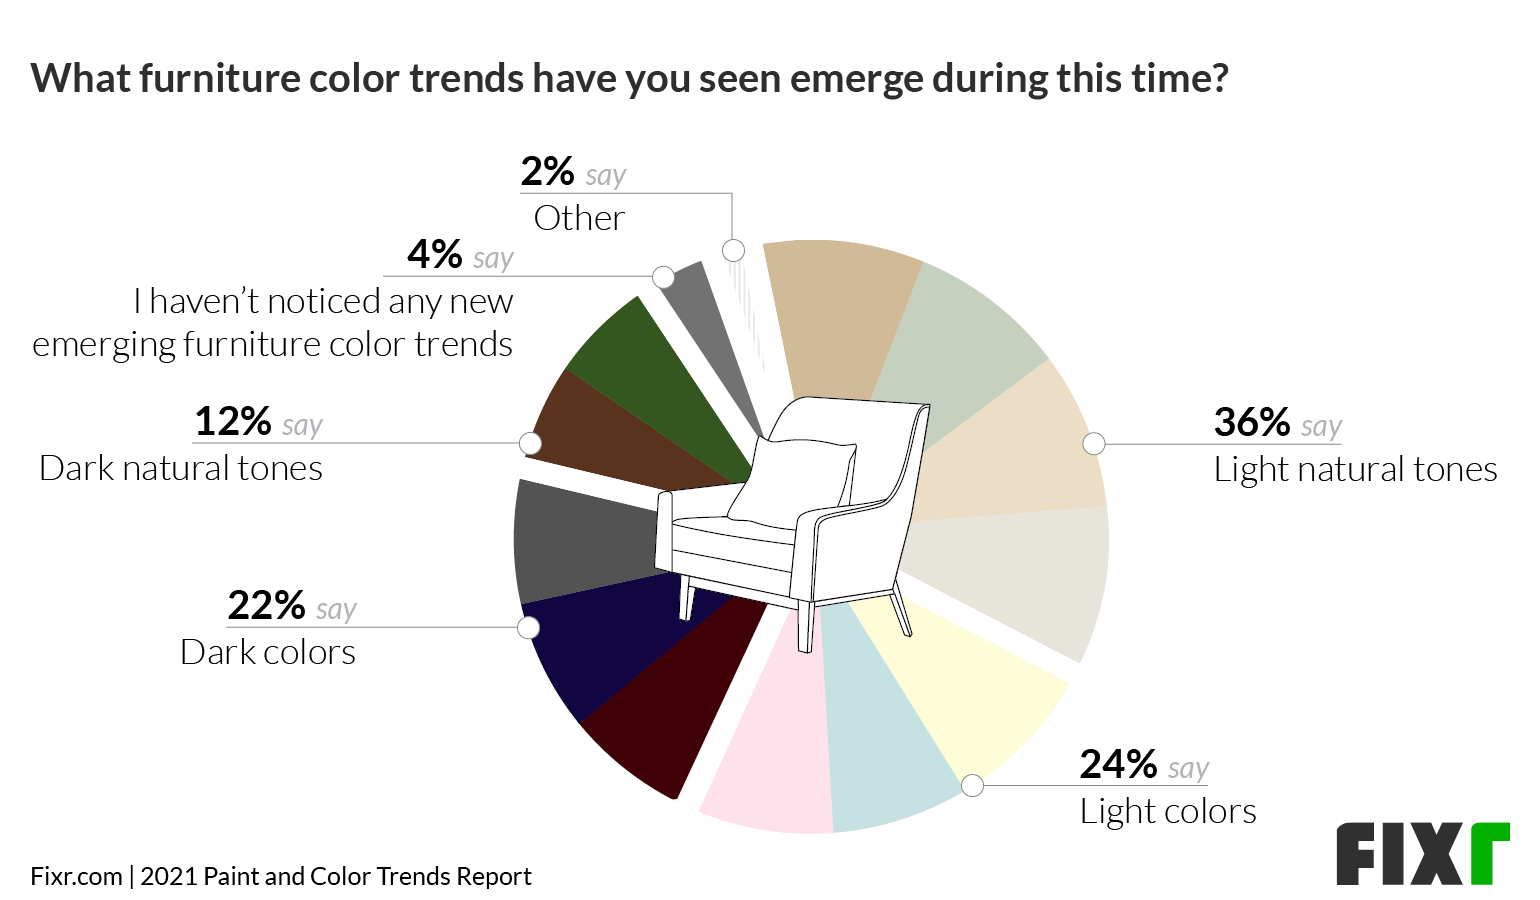 Paint & Color Trends 2021 - Furniture Color Trends